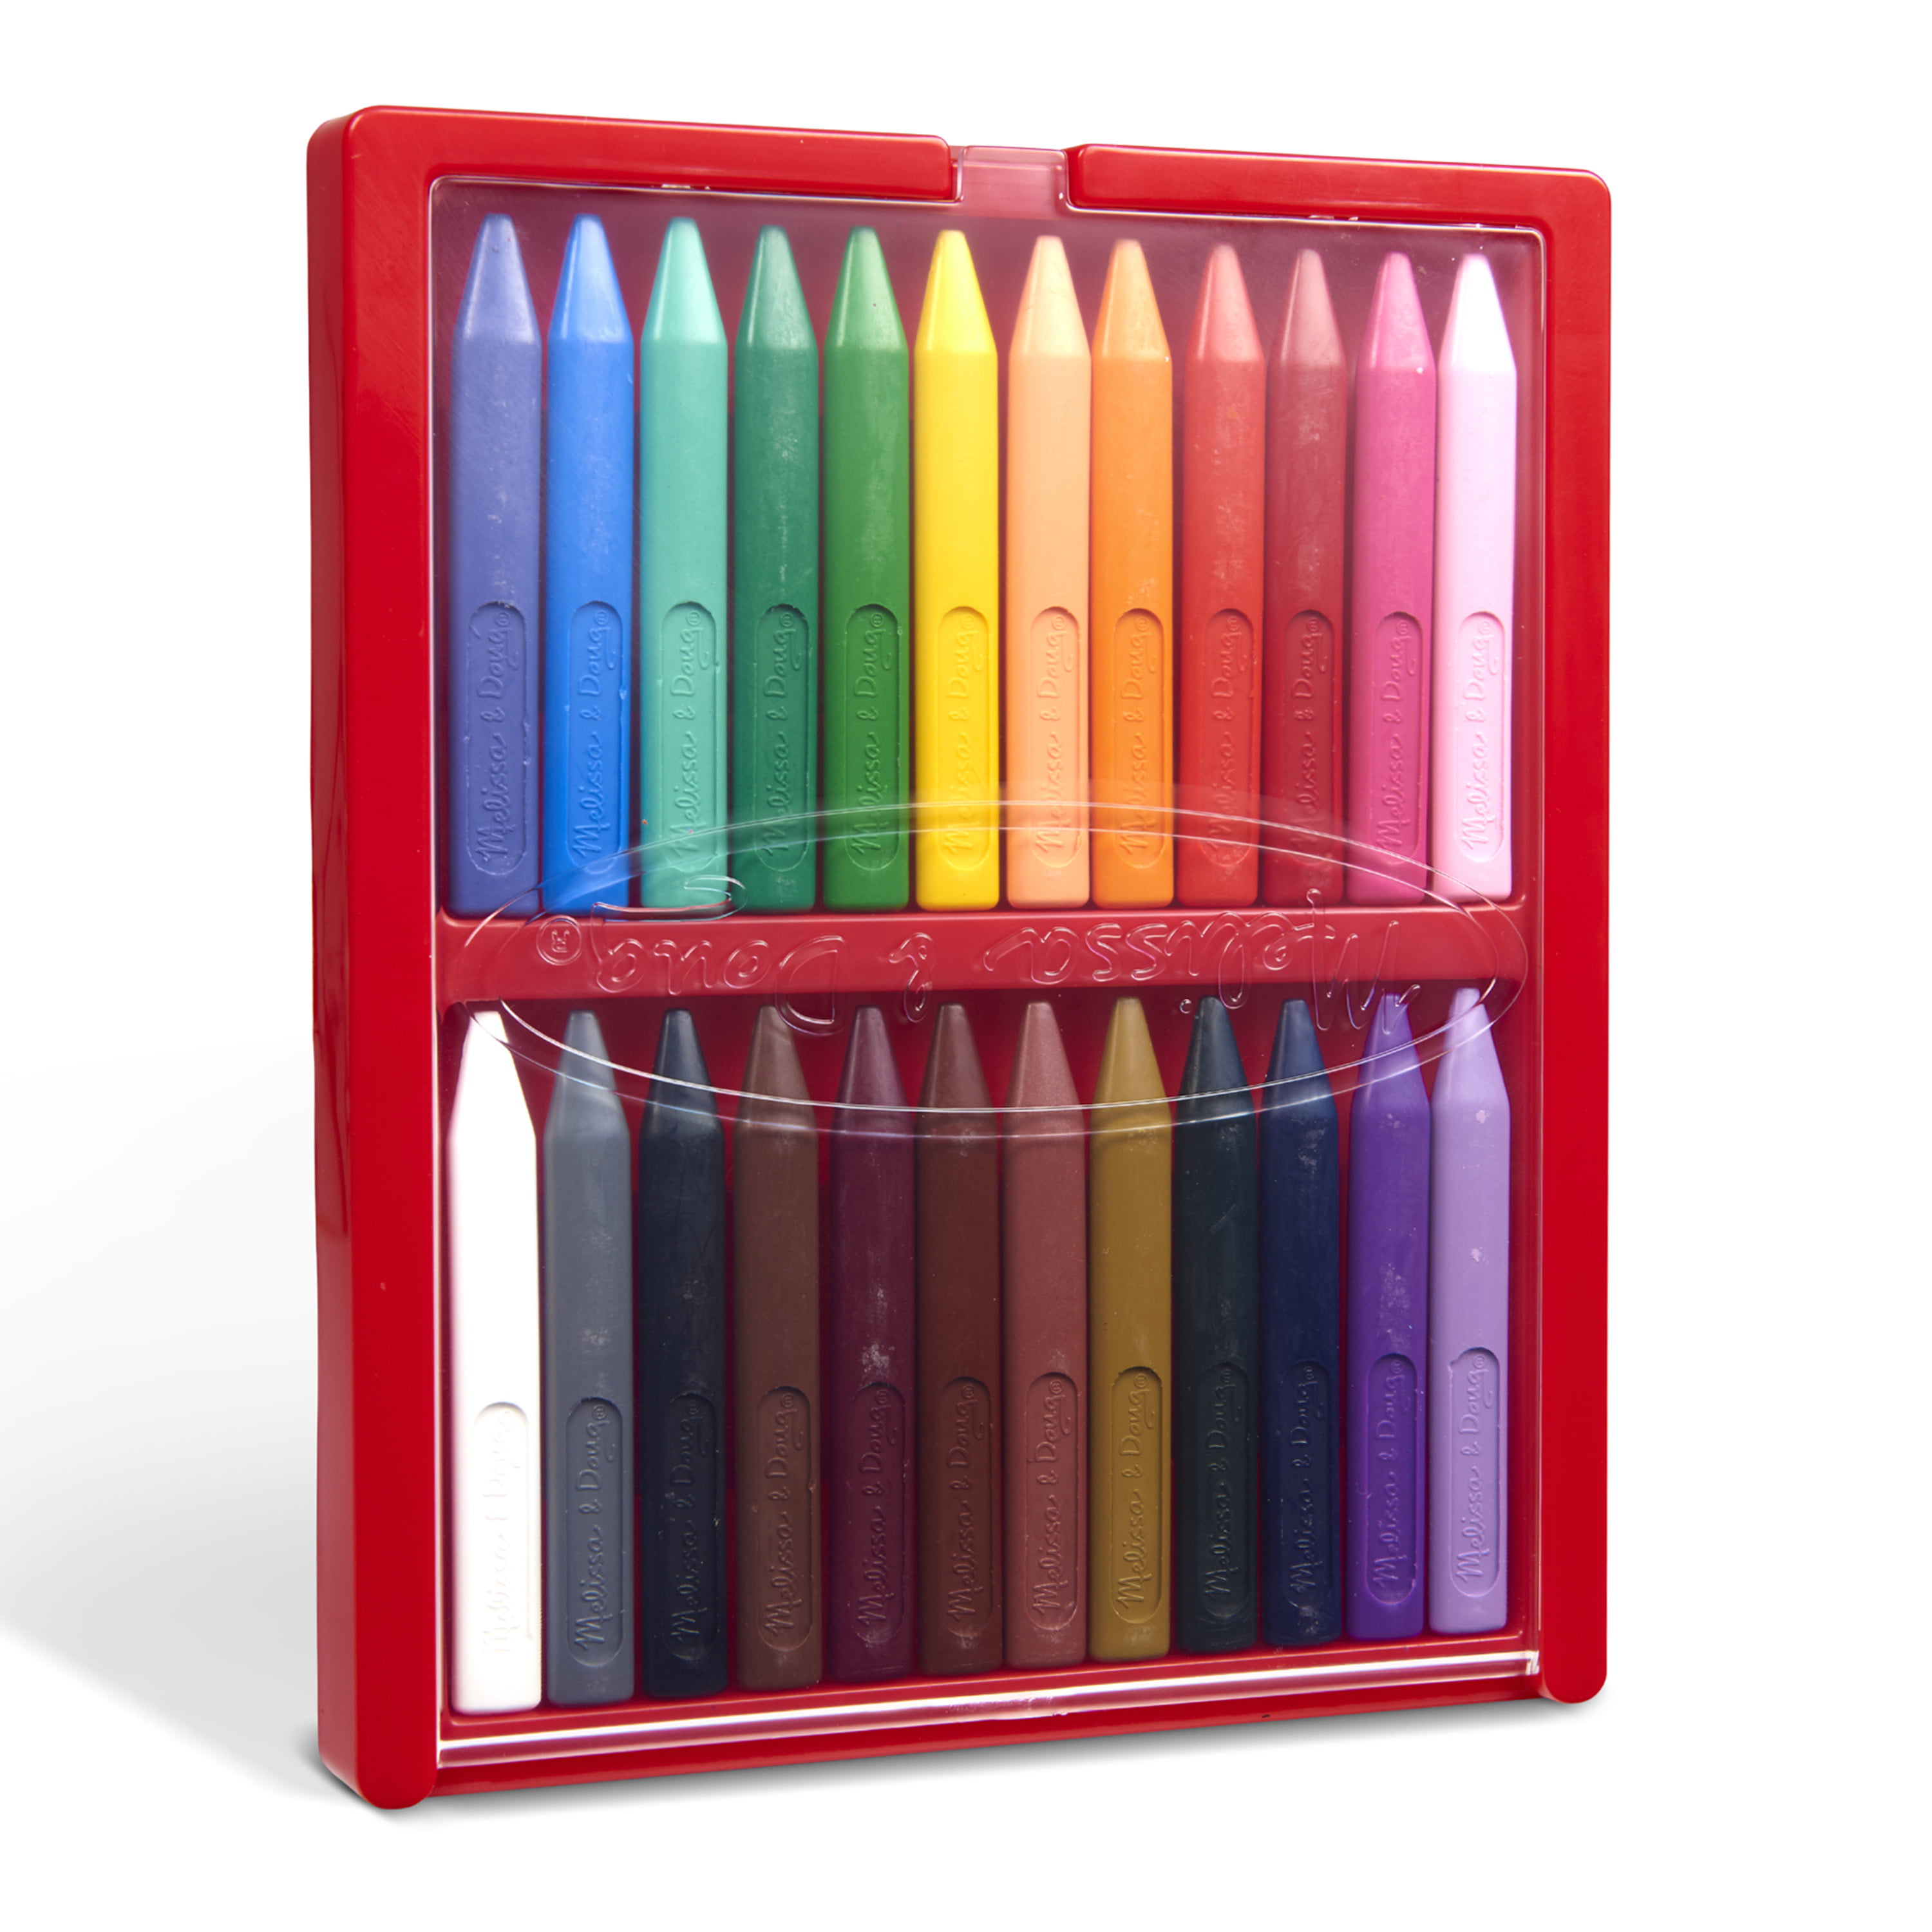 Melissa & Doug Triangular Crayons - 24-Pack in Flip-Top Case, Non-Roll